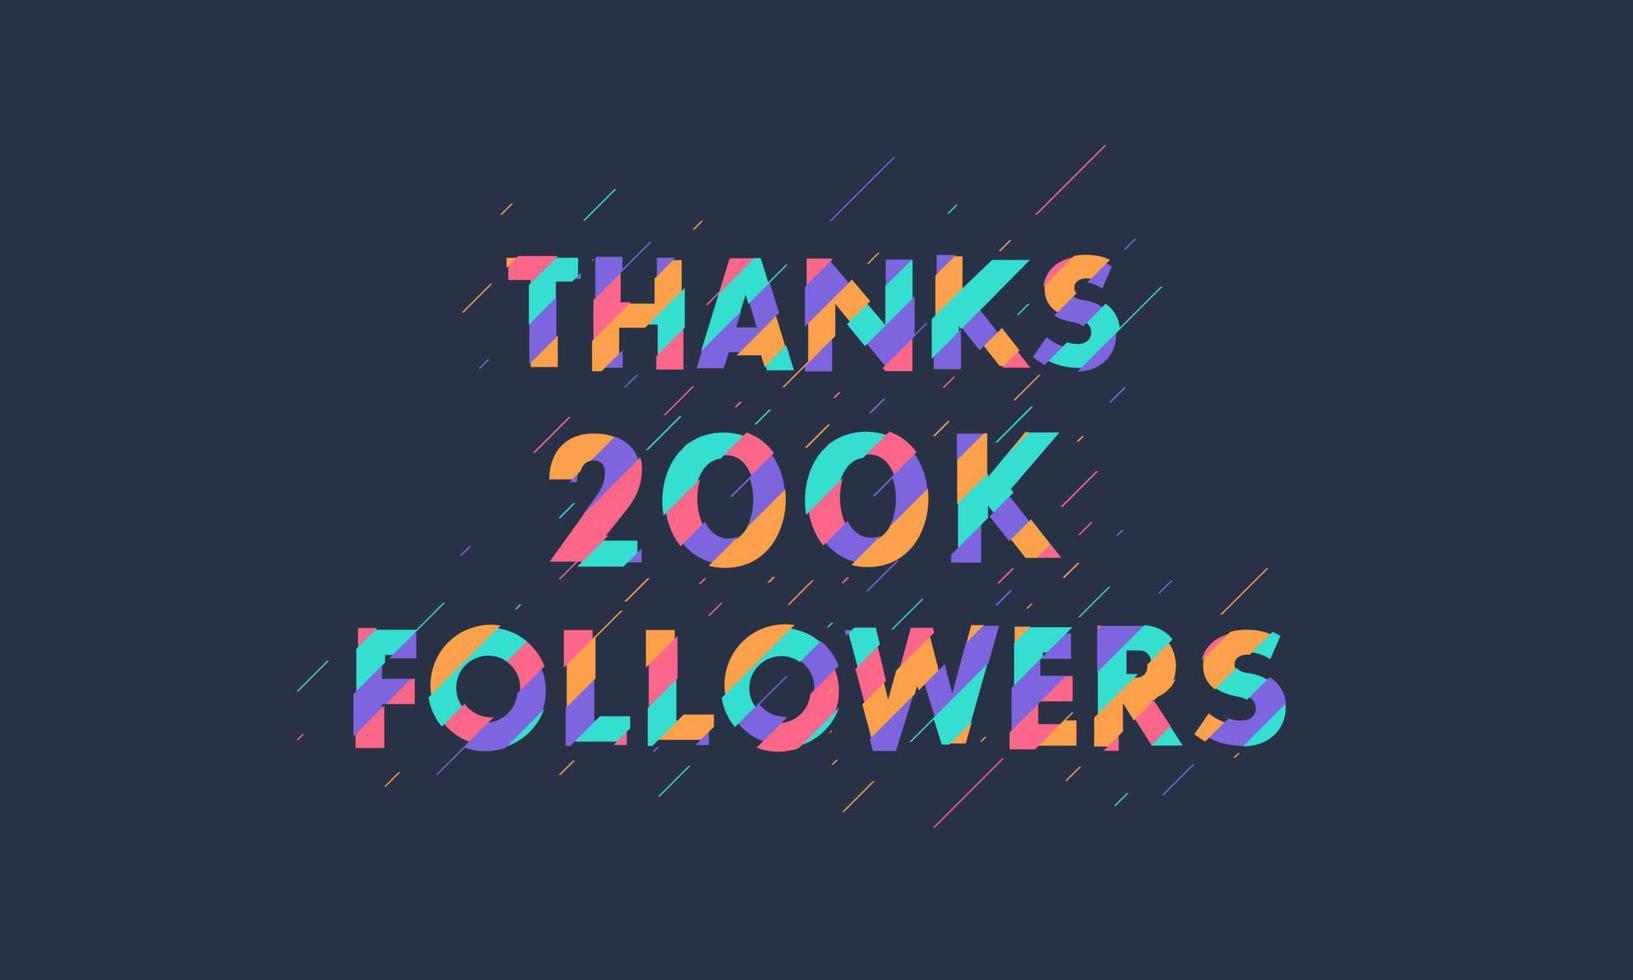 Thanks 200K followers, 200000 followers celebration modern colorful design. vector